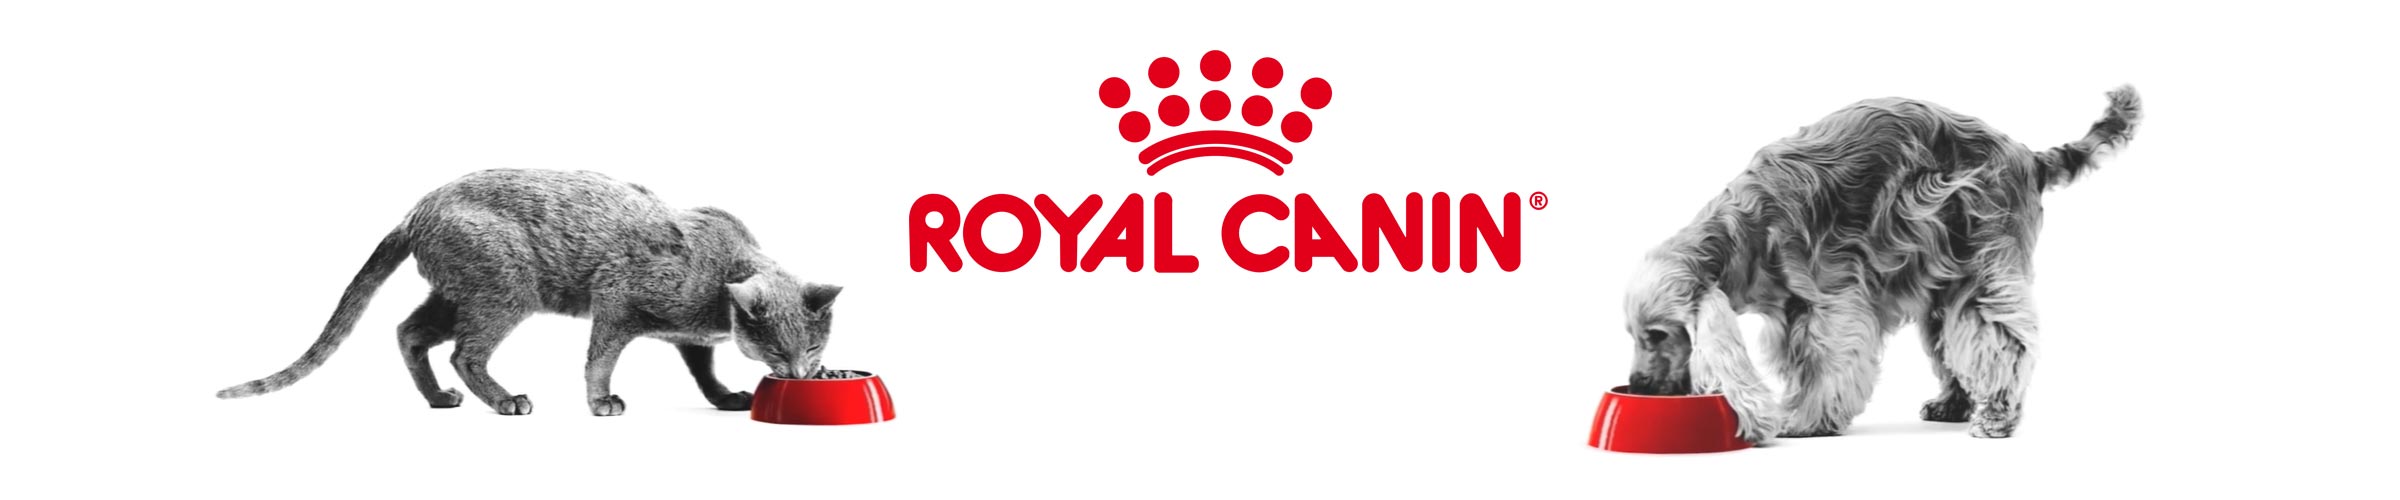 Buy Royal Canin from Wallington's WRG